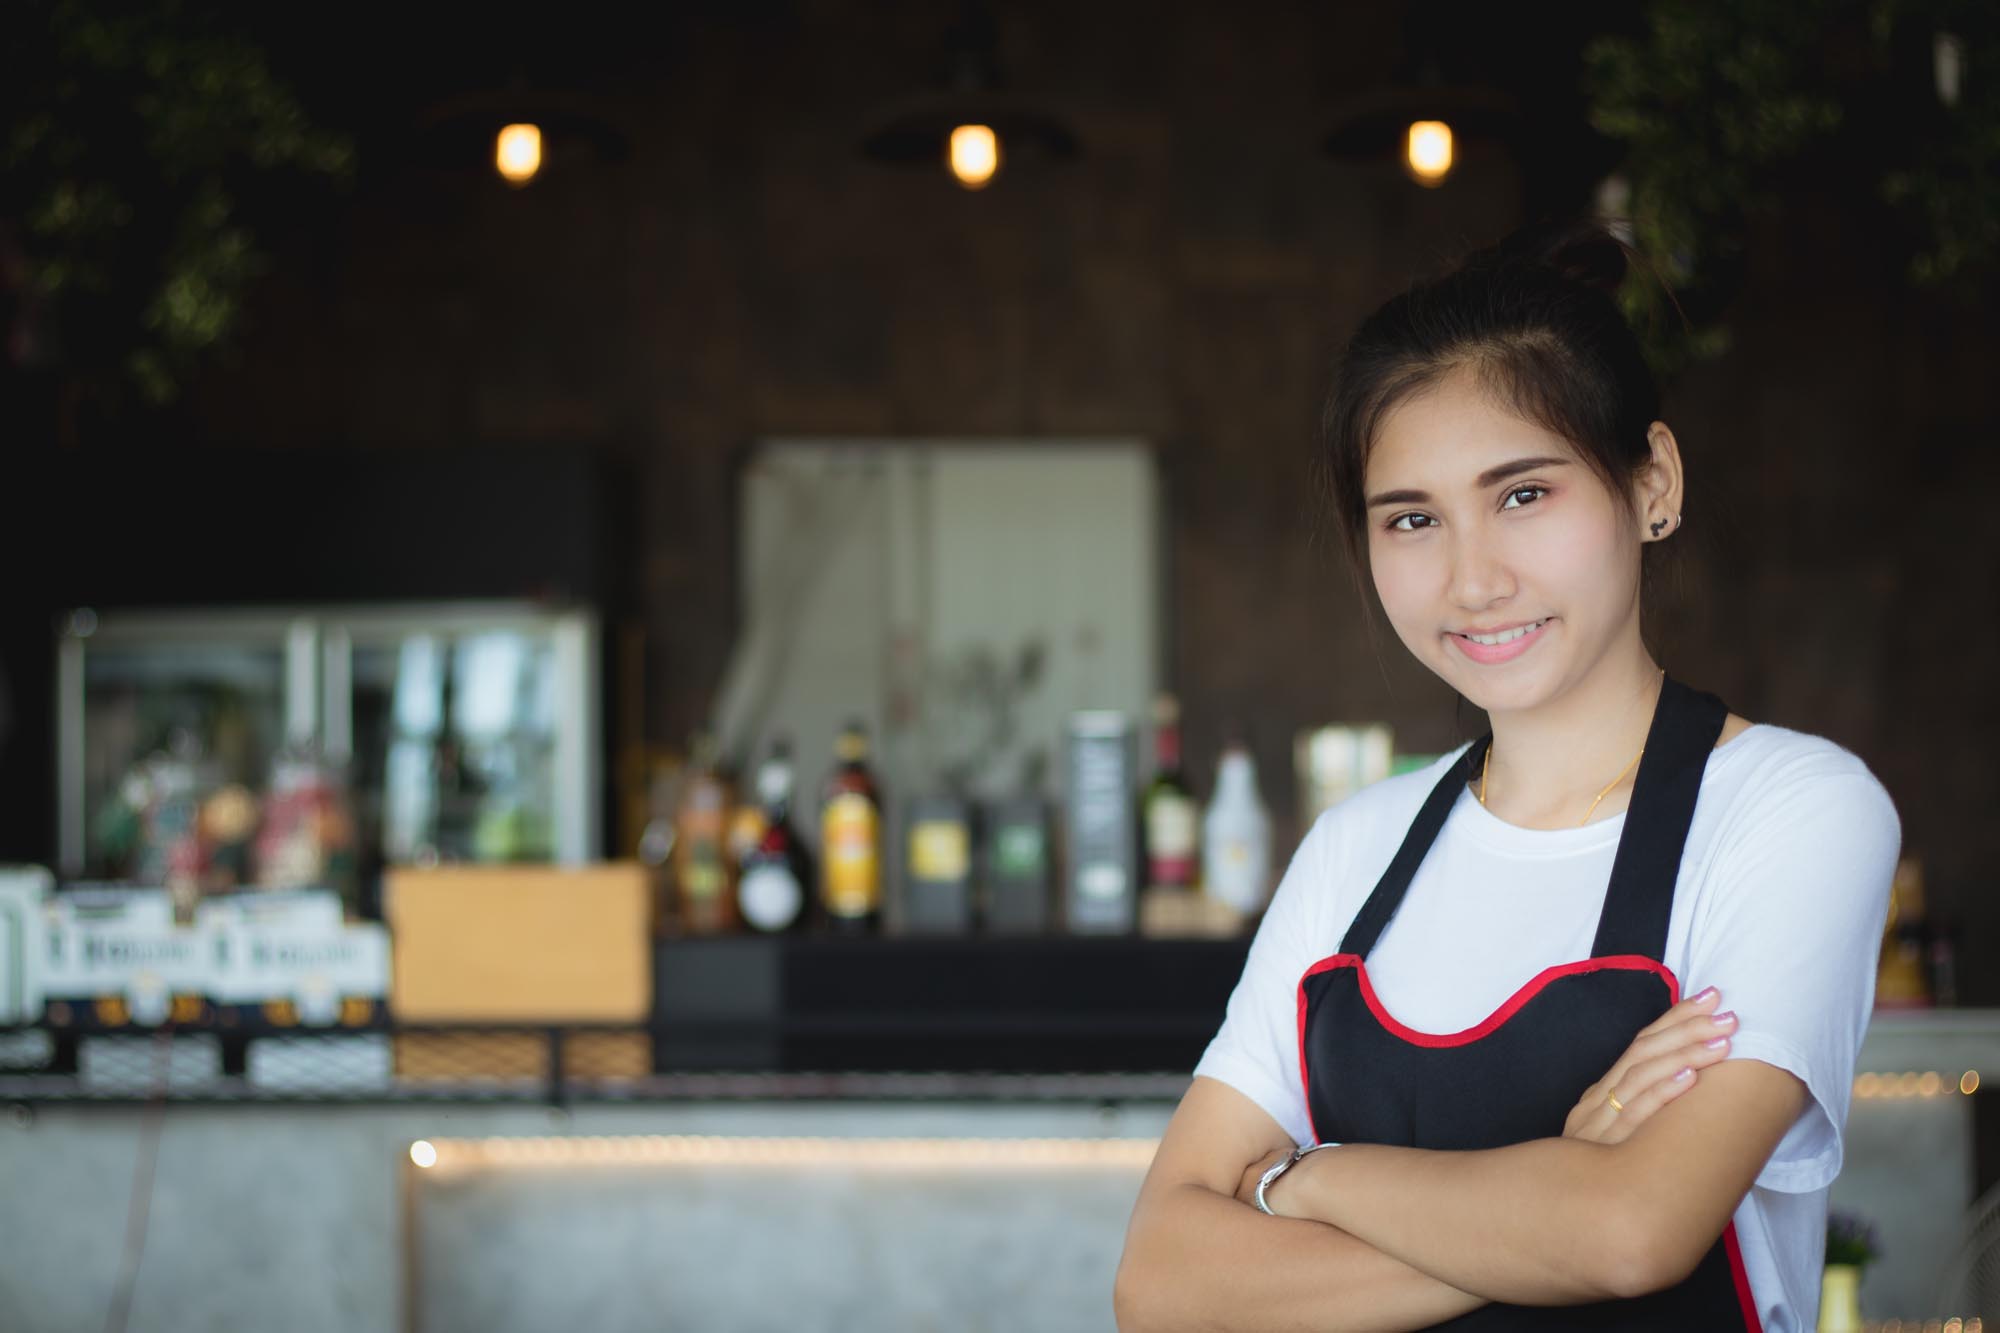 eTool : Young Worker Safety in Restaurants - Drive-thru